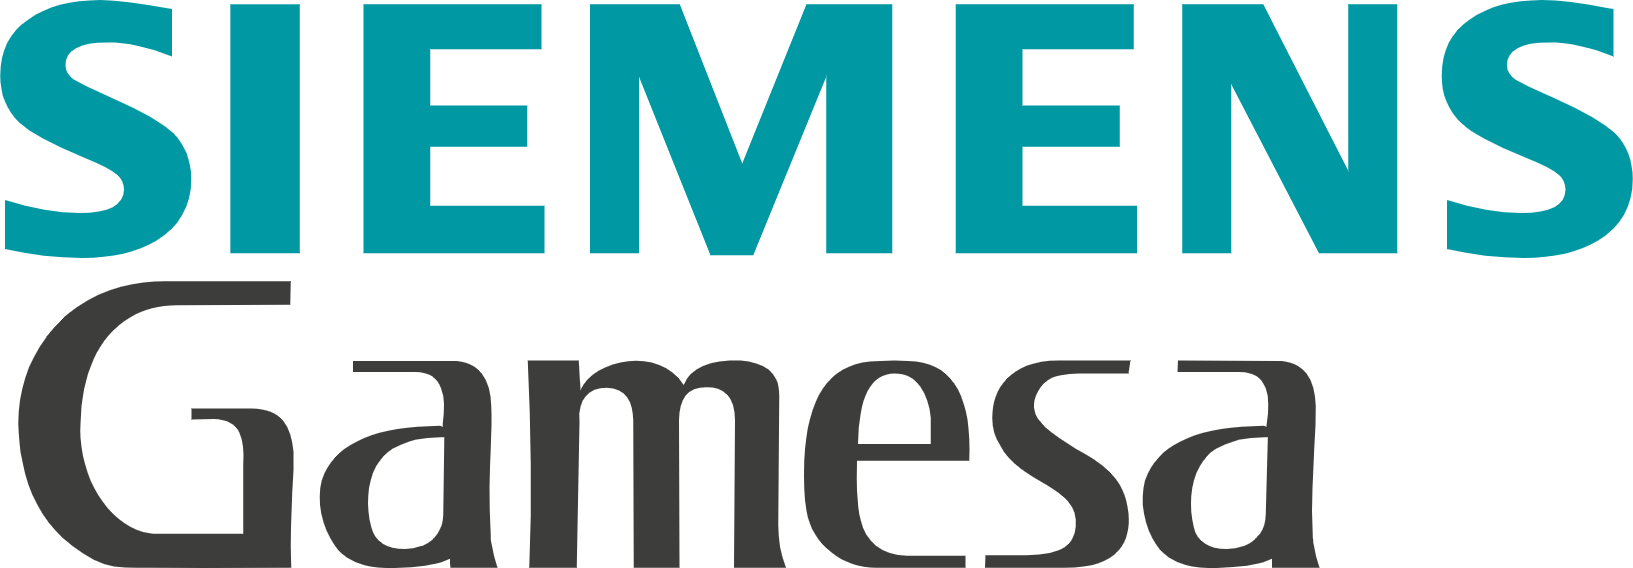 Siemens Gamesa logo (transparent PNG)